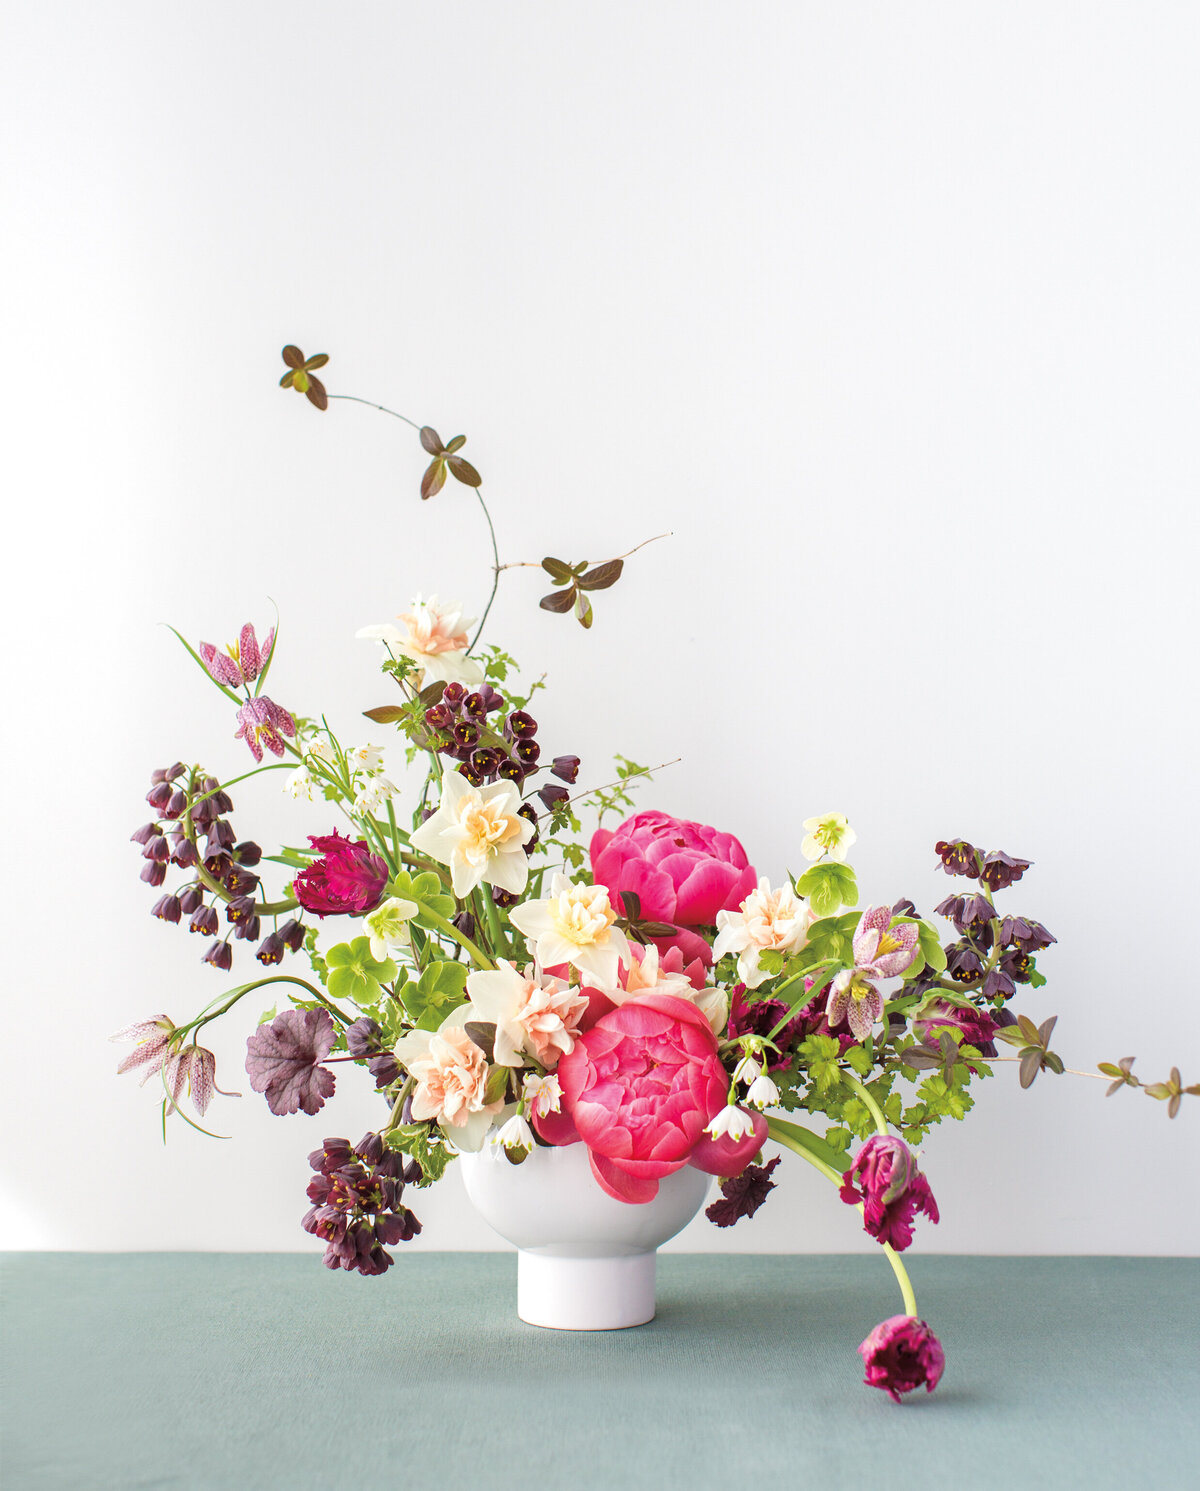 Atelier-Carmel-Wedding-Florist-GALLERY-Arrangements-24